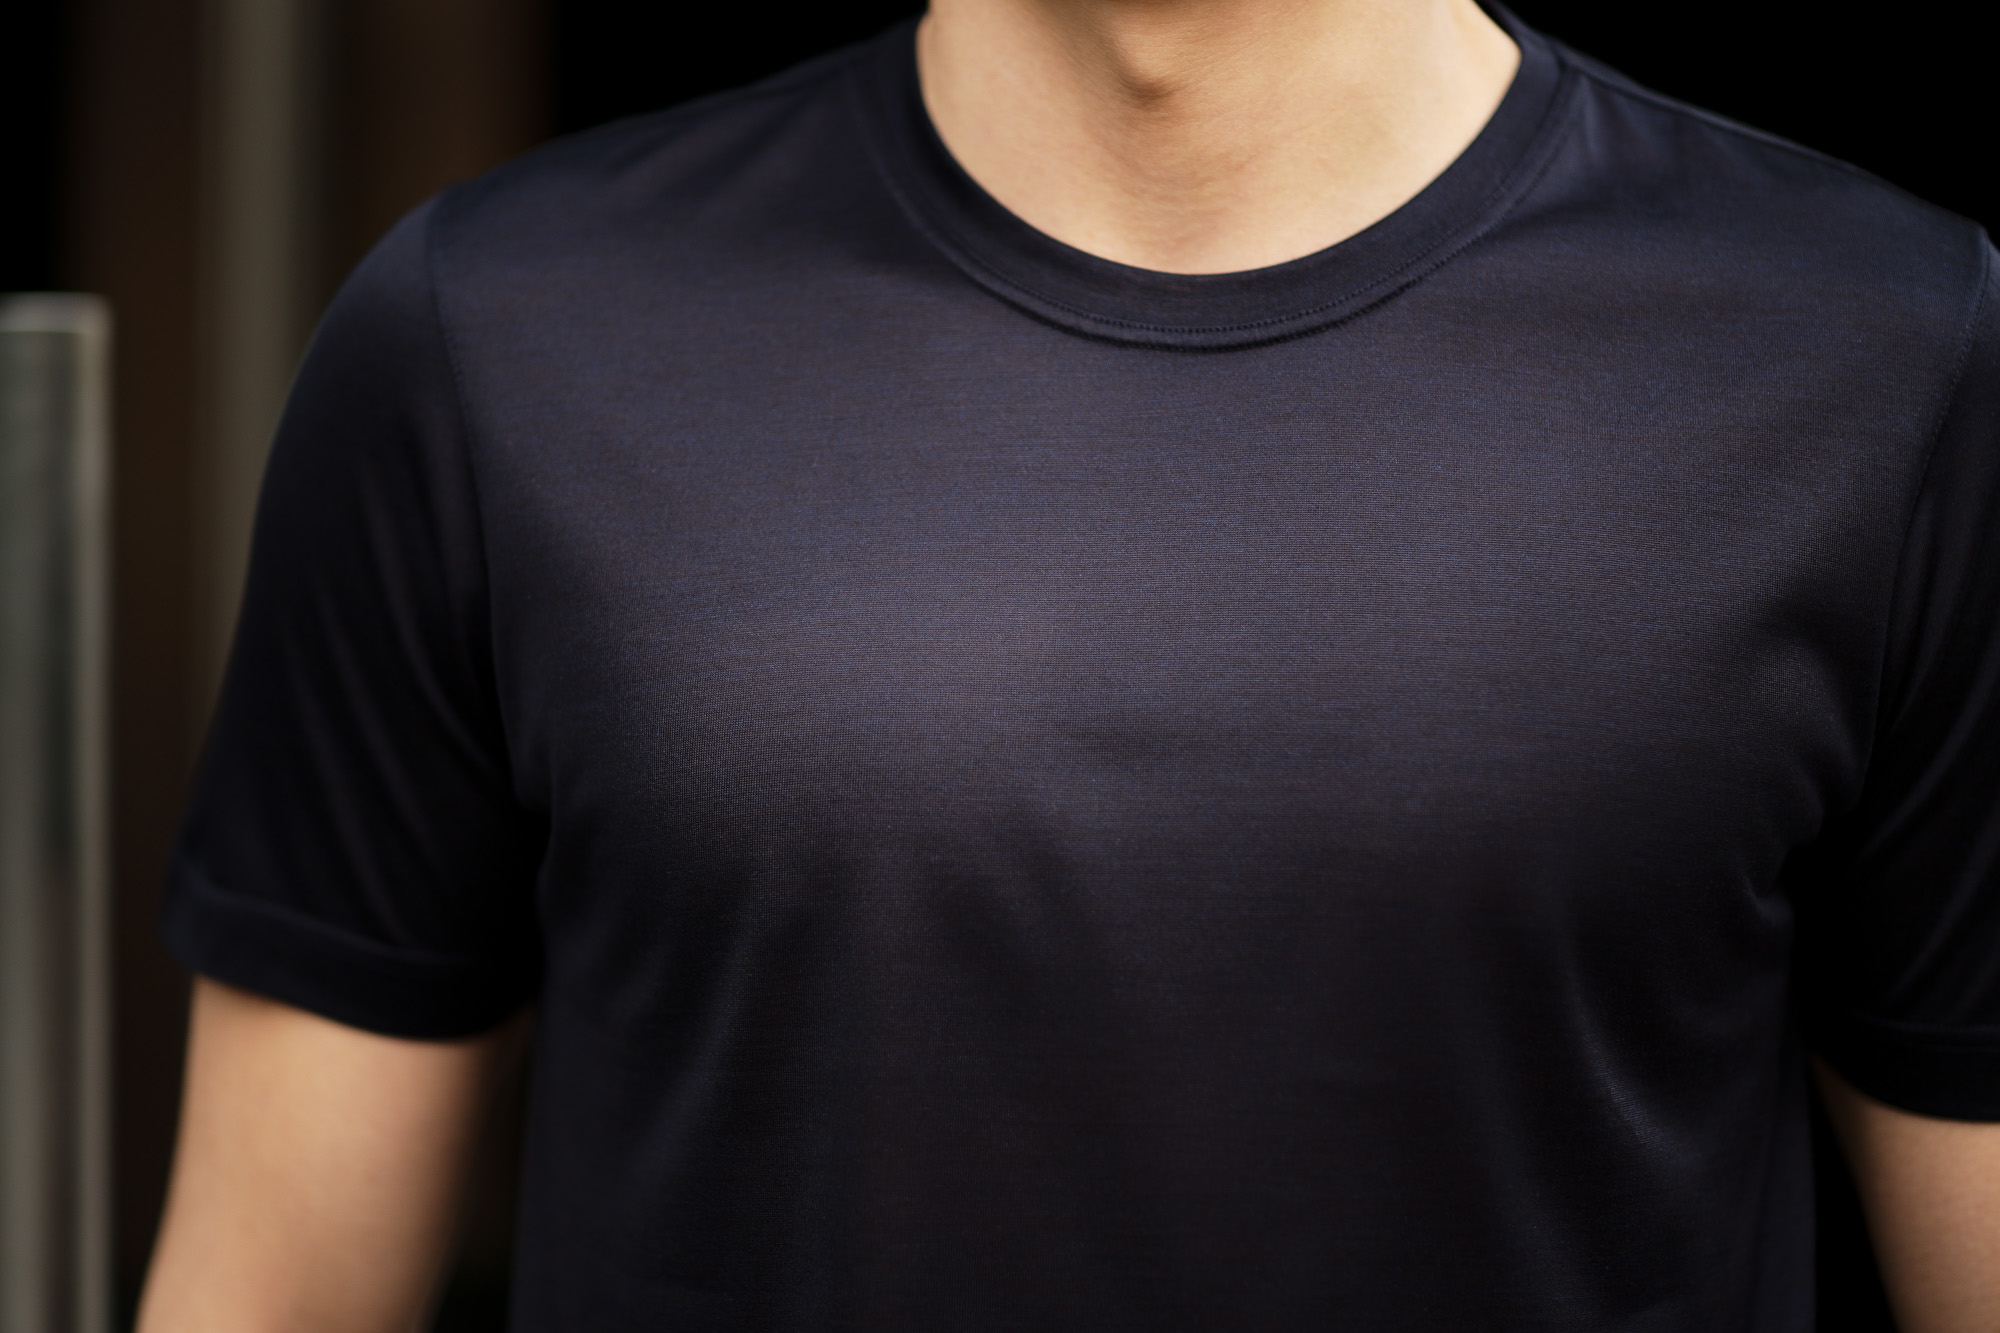 Gran Sasso (グランサッソ) Silk T-shirt (シルク Tシャツ) SETA (シルク 100%) ショートスリーブ シルク Tシャツ NAVY (ネイビー・308) made in italy (イタリア製) 2020 春夏新作   愛知 名古屋 altoediritto アルトエデリット